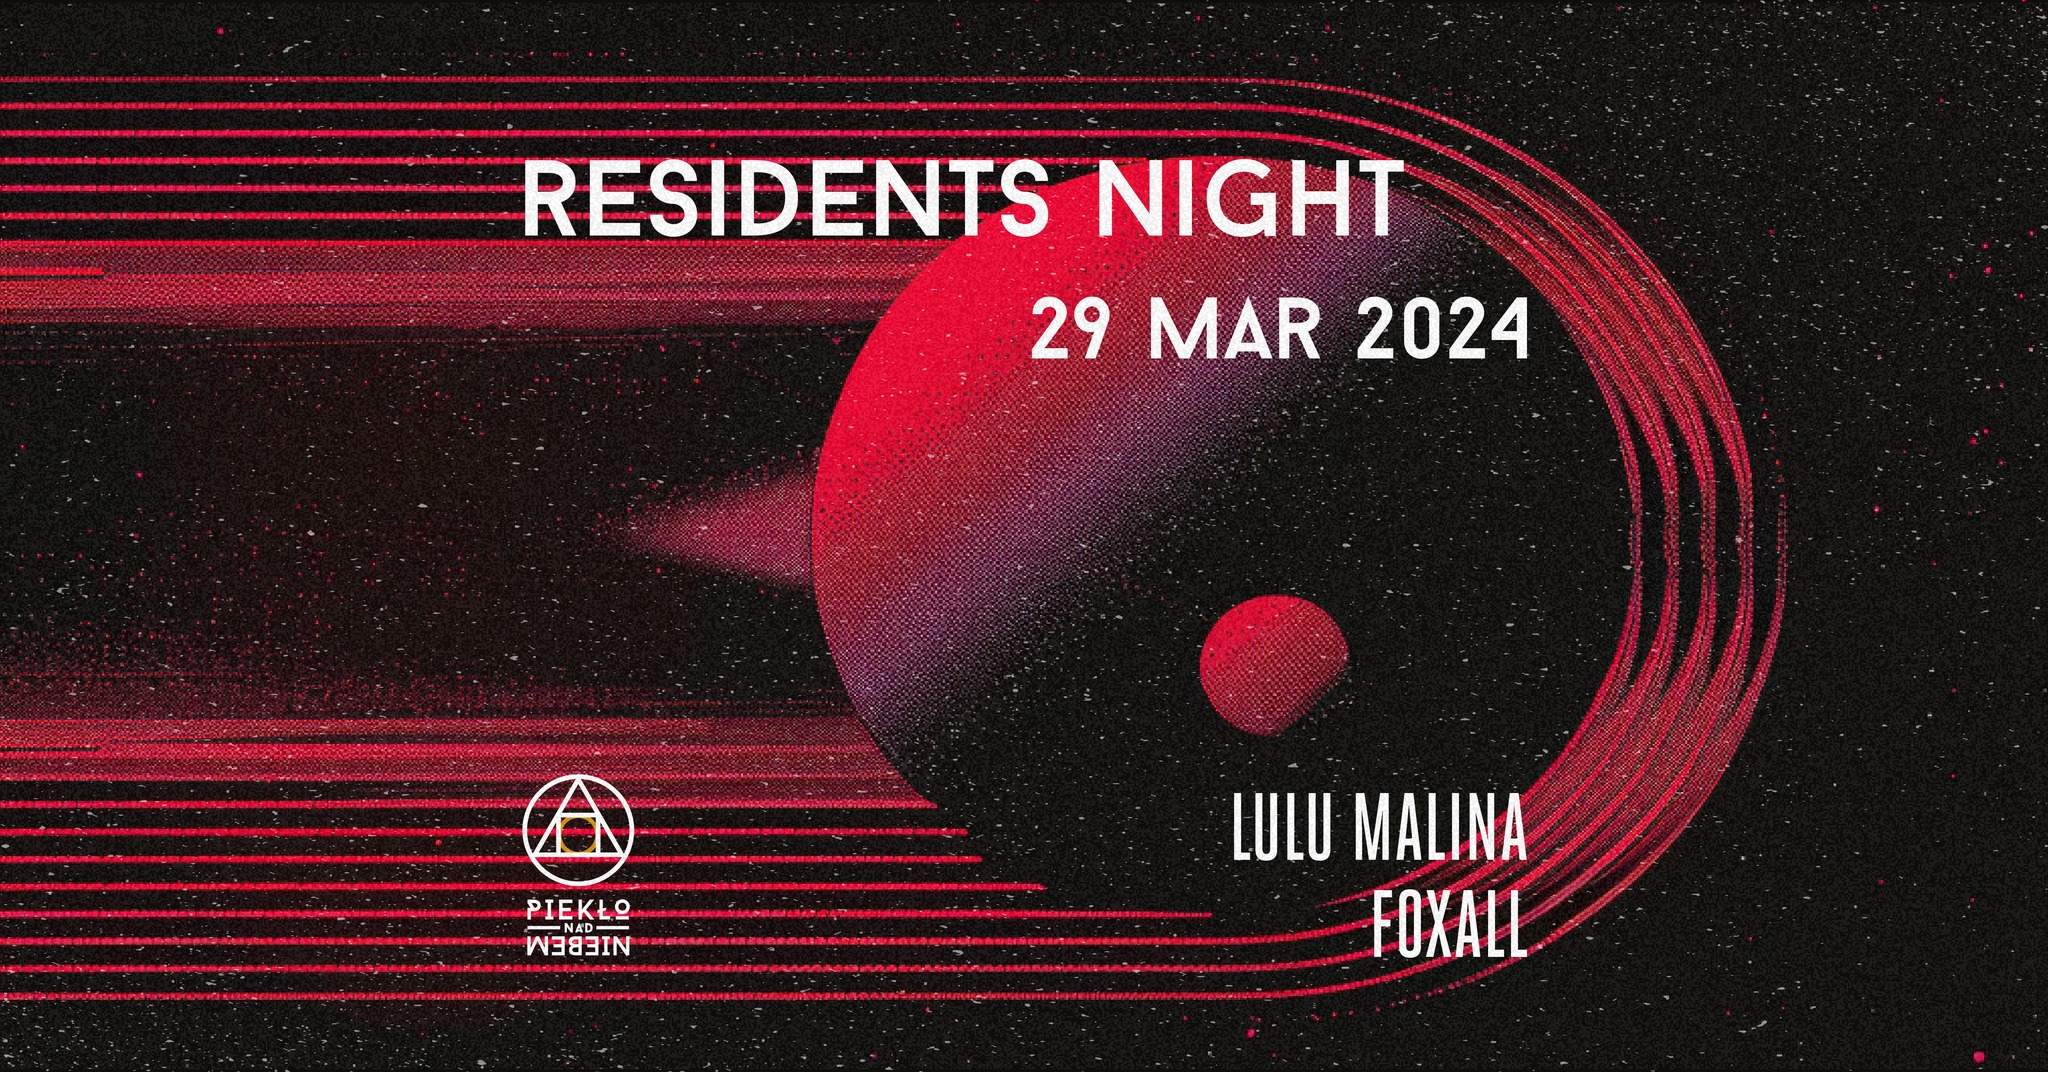 RESIDENTS NIGHT: LULU MALINA & Foxall - フライヤー表